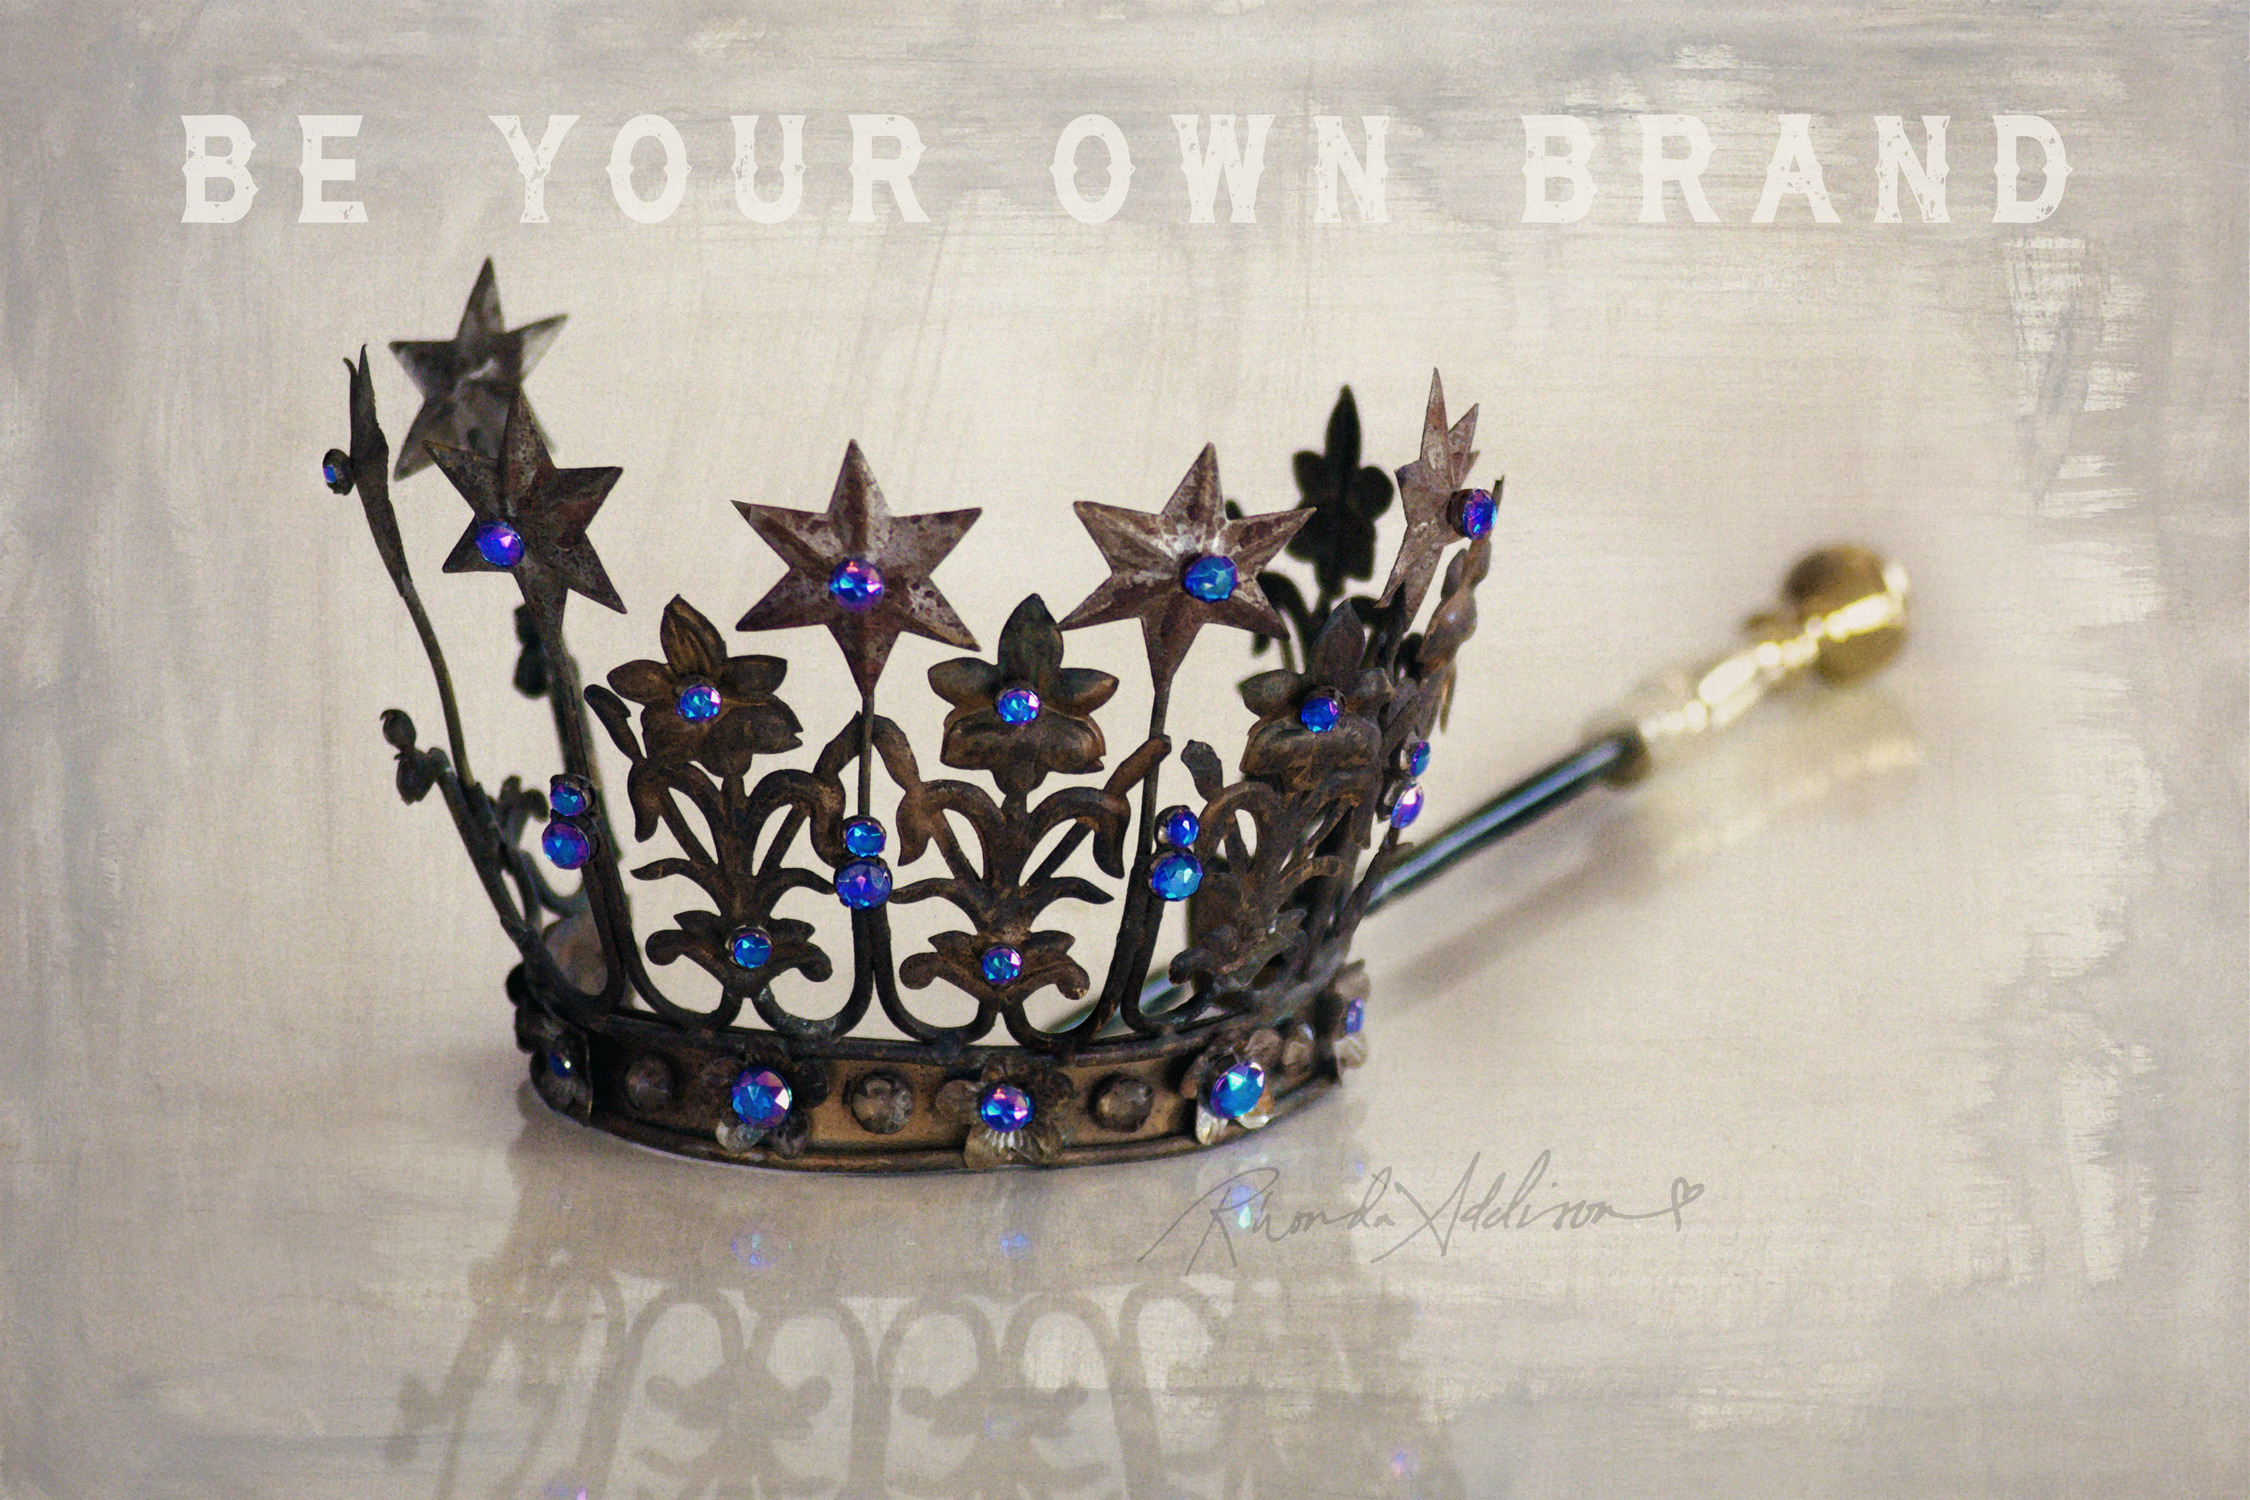 Crown brand ss prvgdy